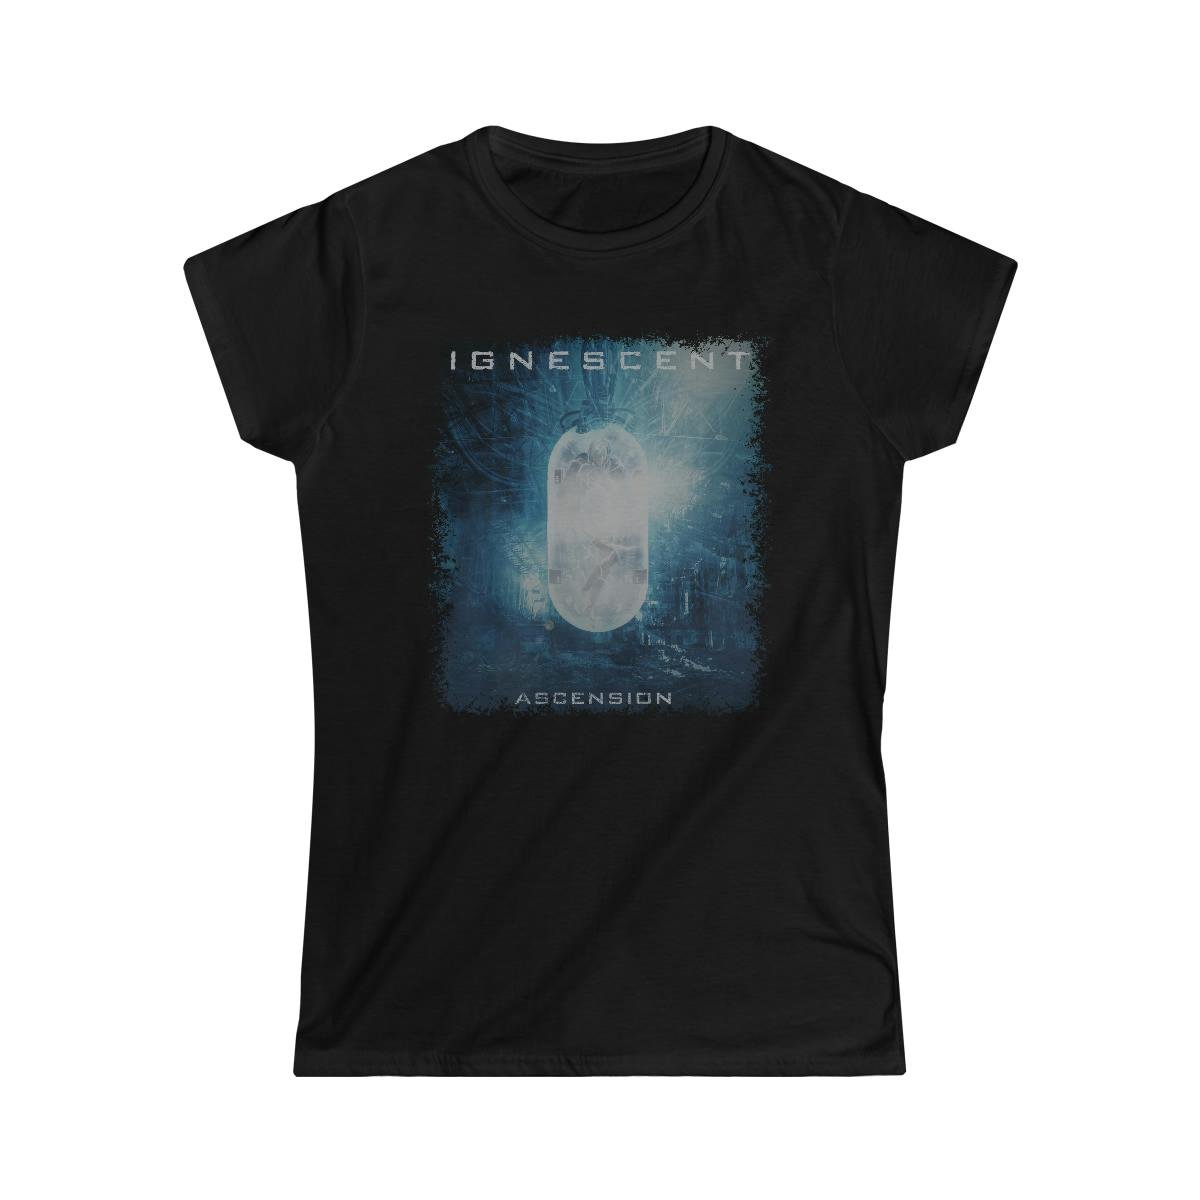 Ignescent – Ascension Women’s Short Sleeve Tshirt